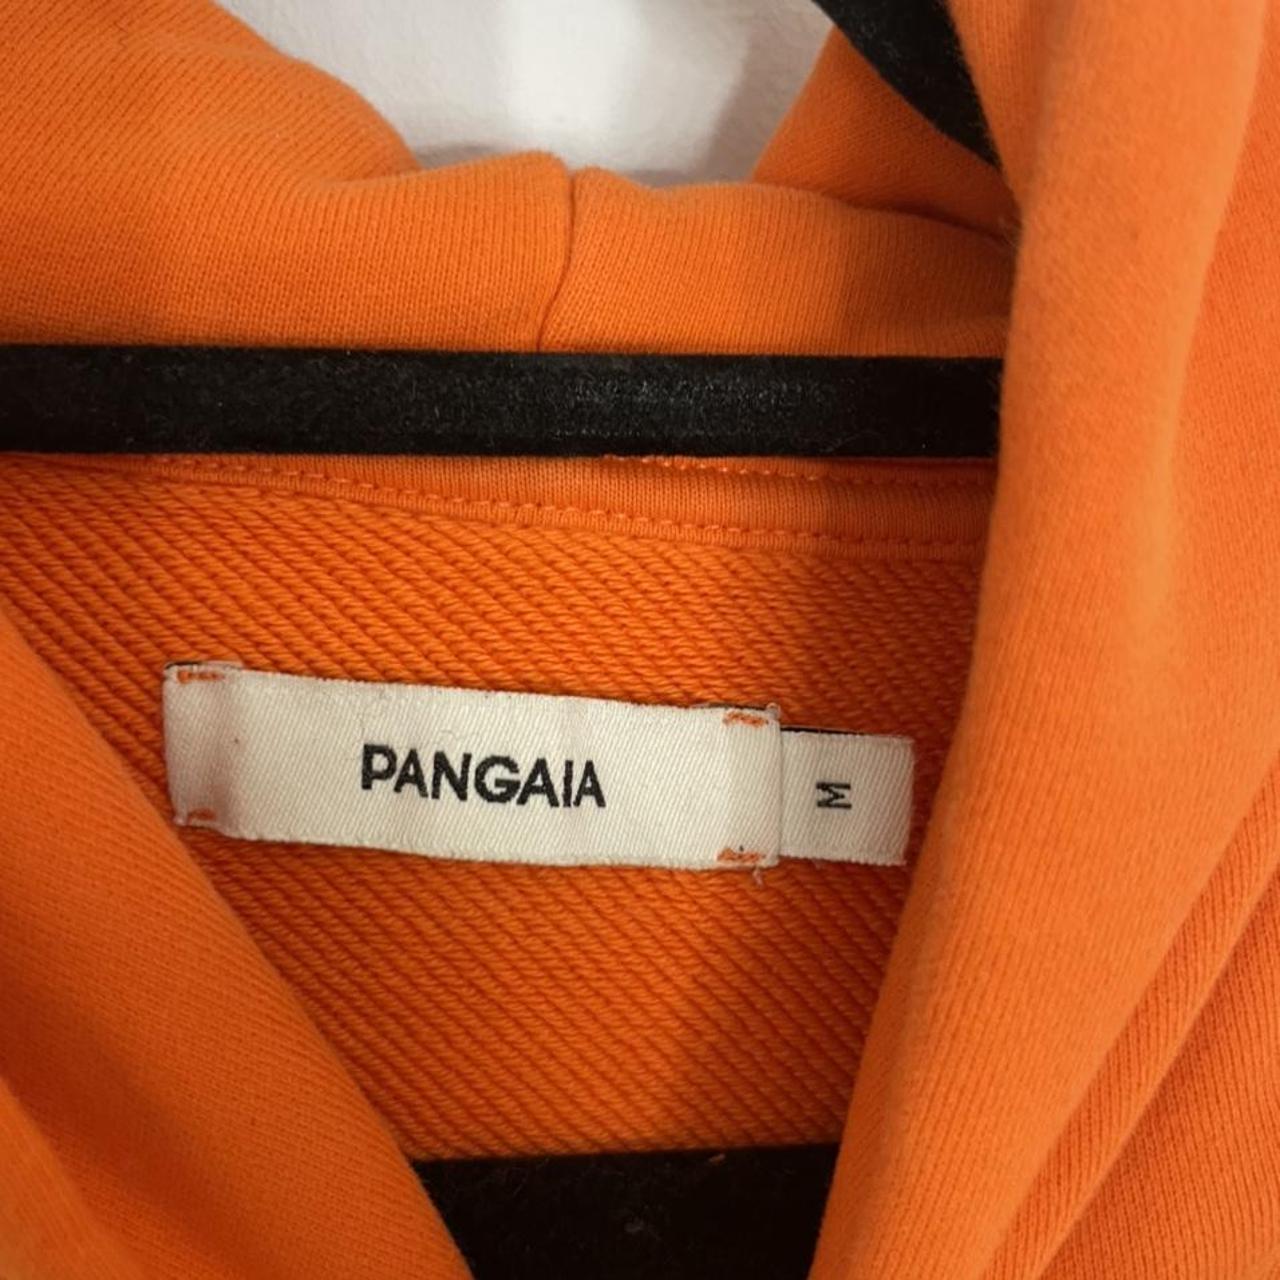 Pangaia Women's Sweatshirt (2)